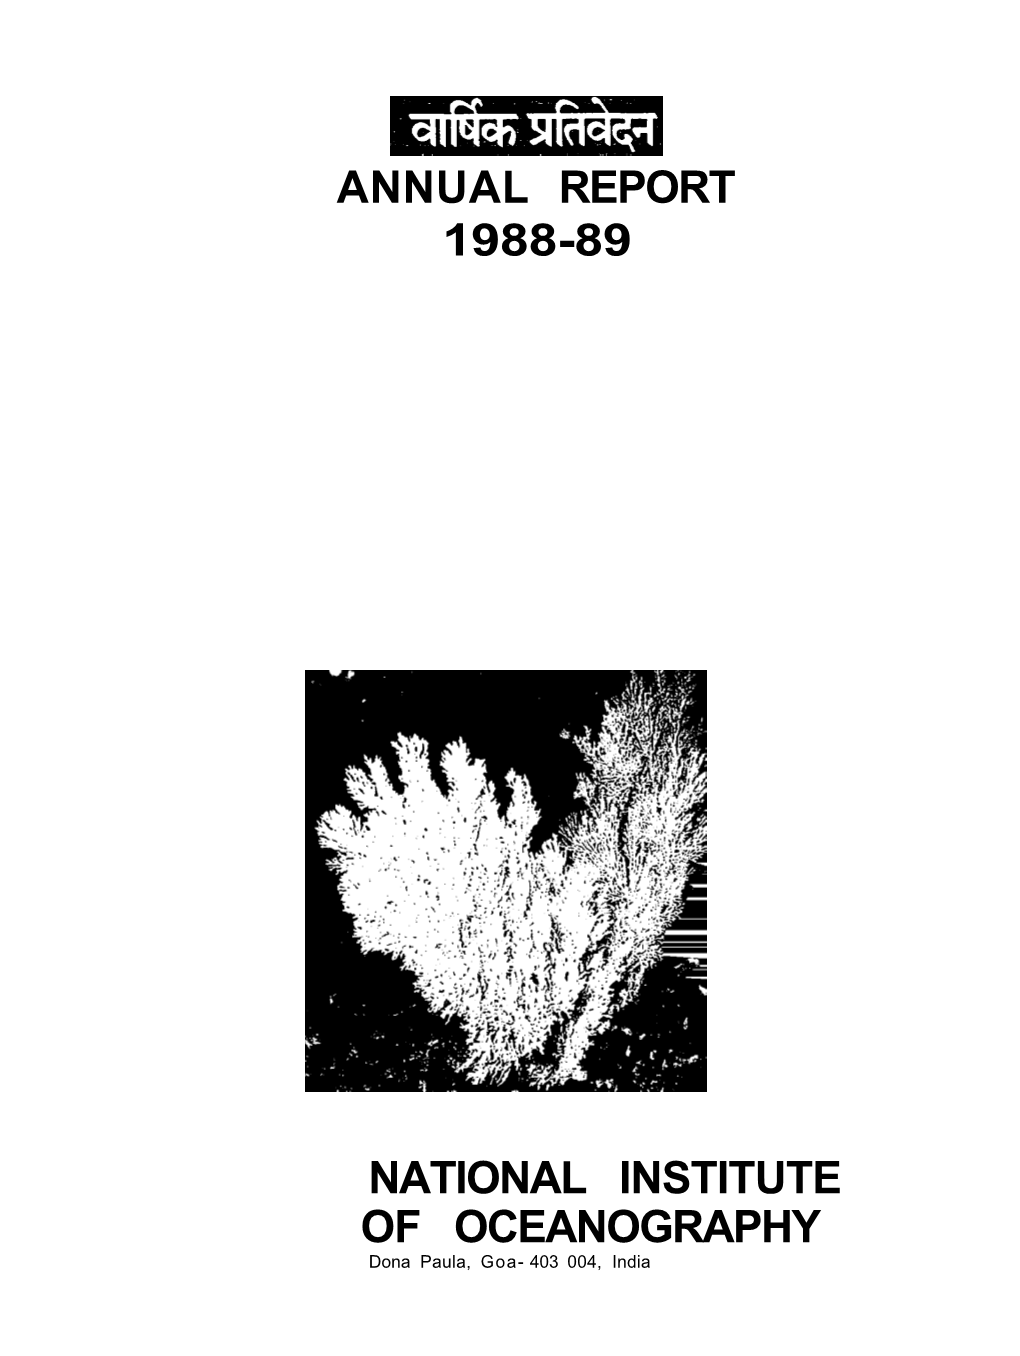 National Institute of Oceanography Annual